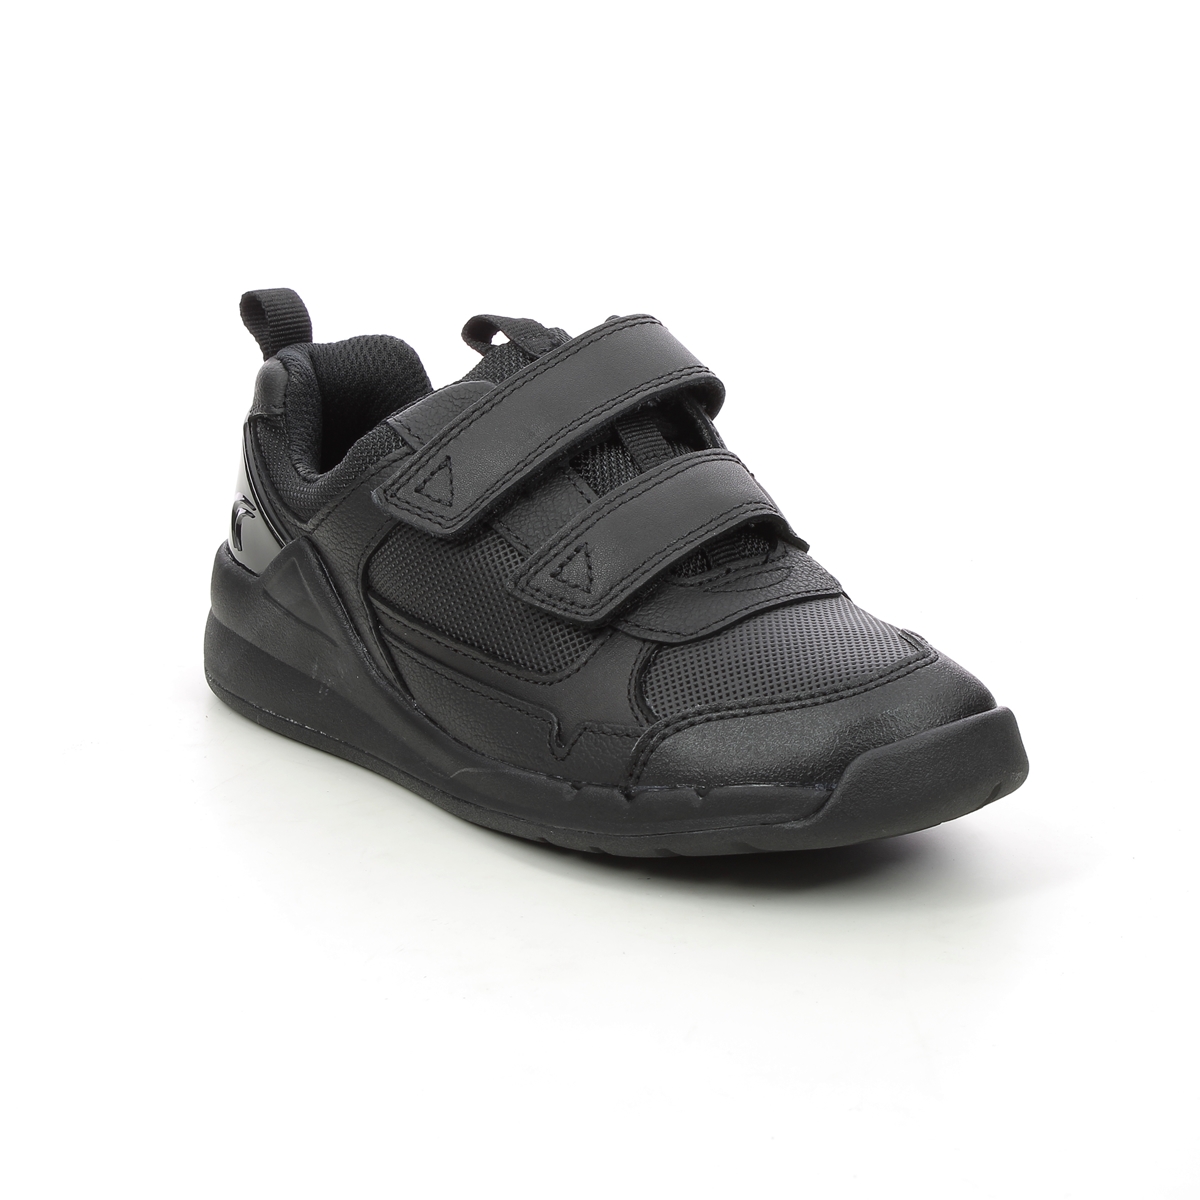 Clarks Orbit Sprint K Black Leather Kids Boys Shoes 534786F In Size 1.5 In Plain Black Leather F Width Fitting Regular Fit For kids